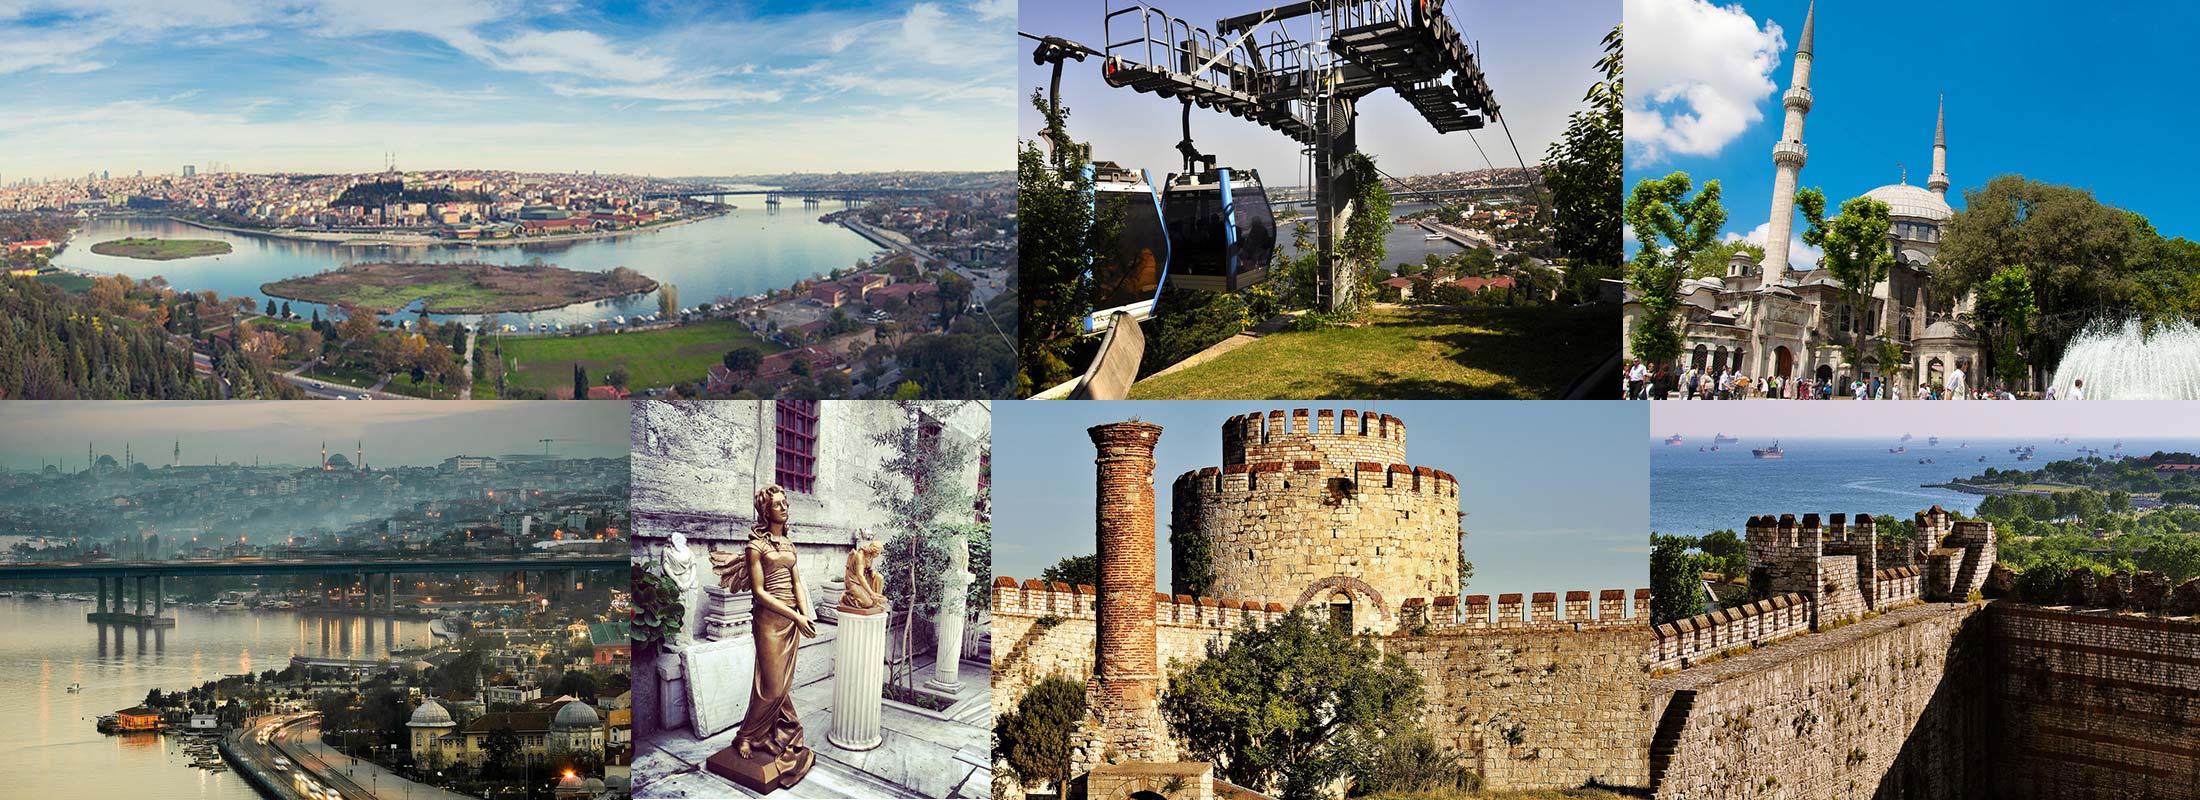 SATURDAY-WALKing-ISTANBUL-TOUR-EYUP-MOSQUE-PIERRE-LOTI-HILL-YEDIKULE-DUNGEONS-TOUR